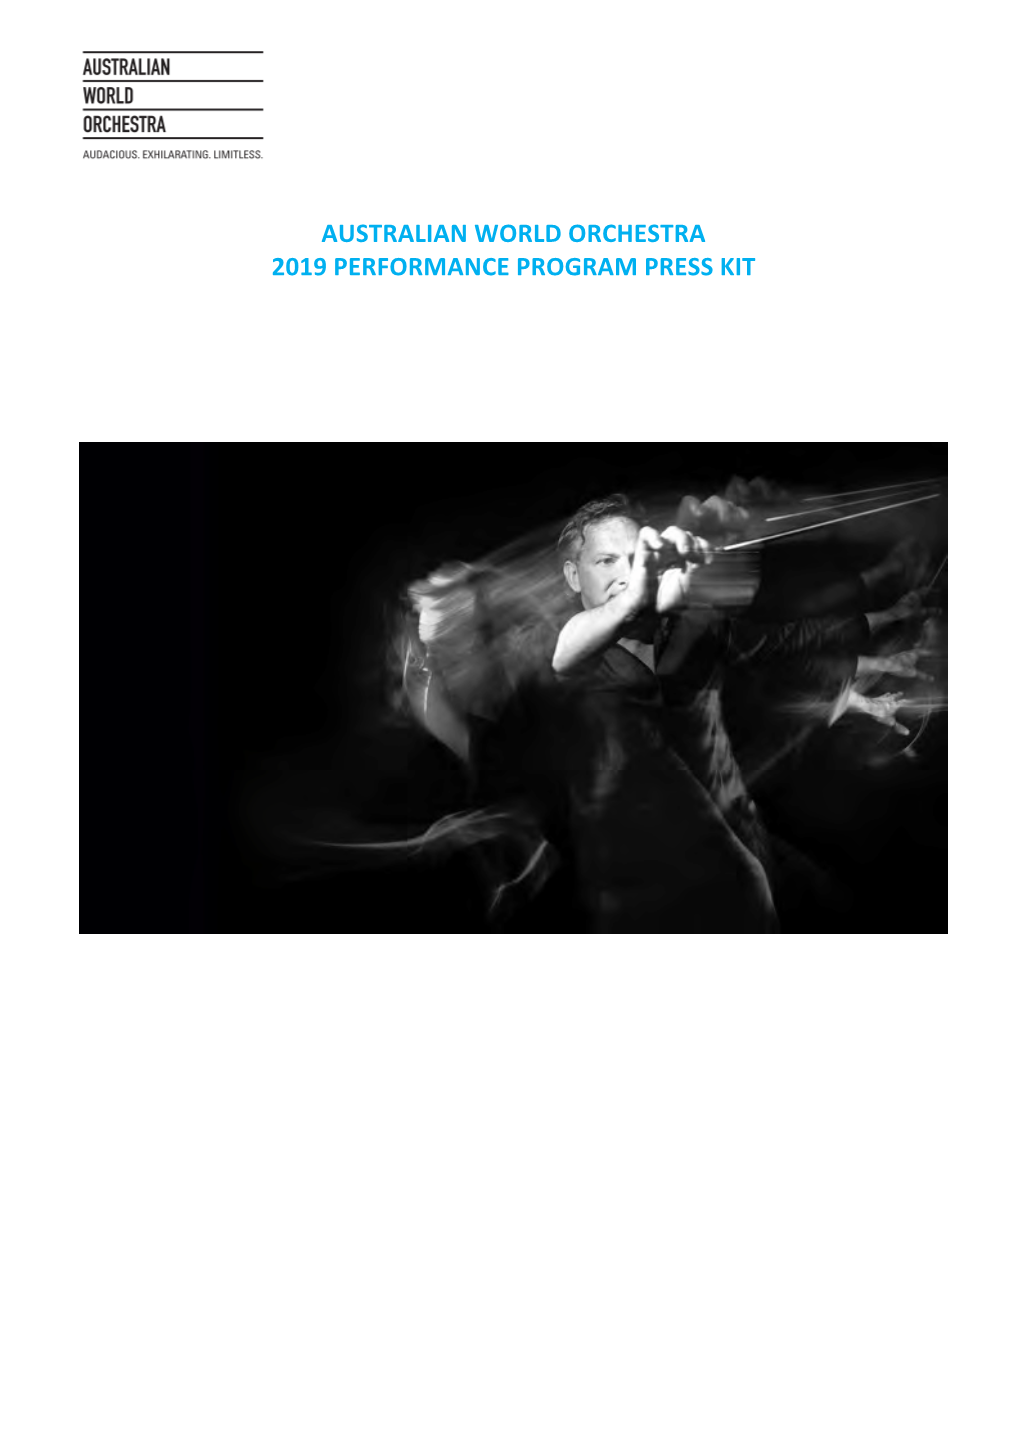 Australian World Orchestra 2019 Performance Program Press Kit Media Release